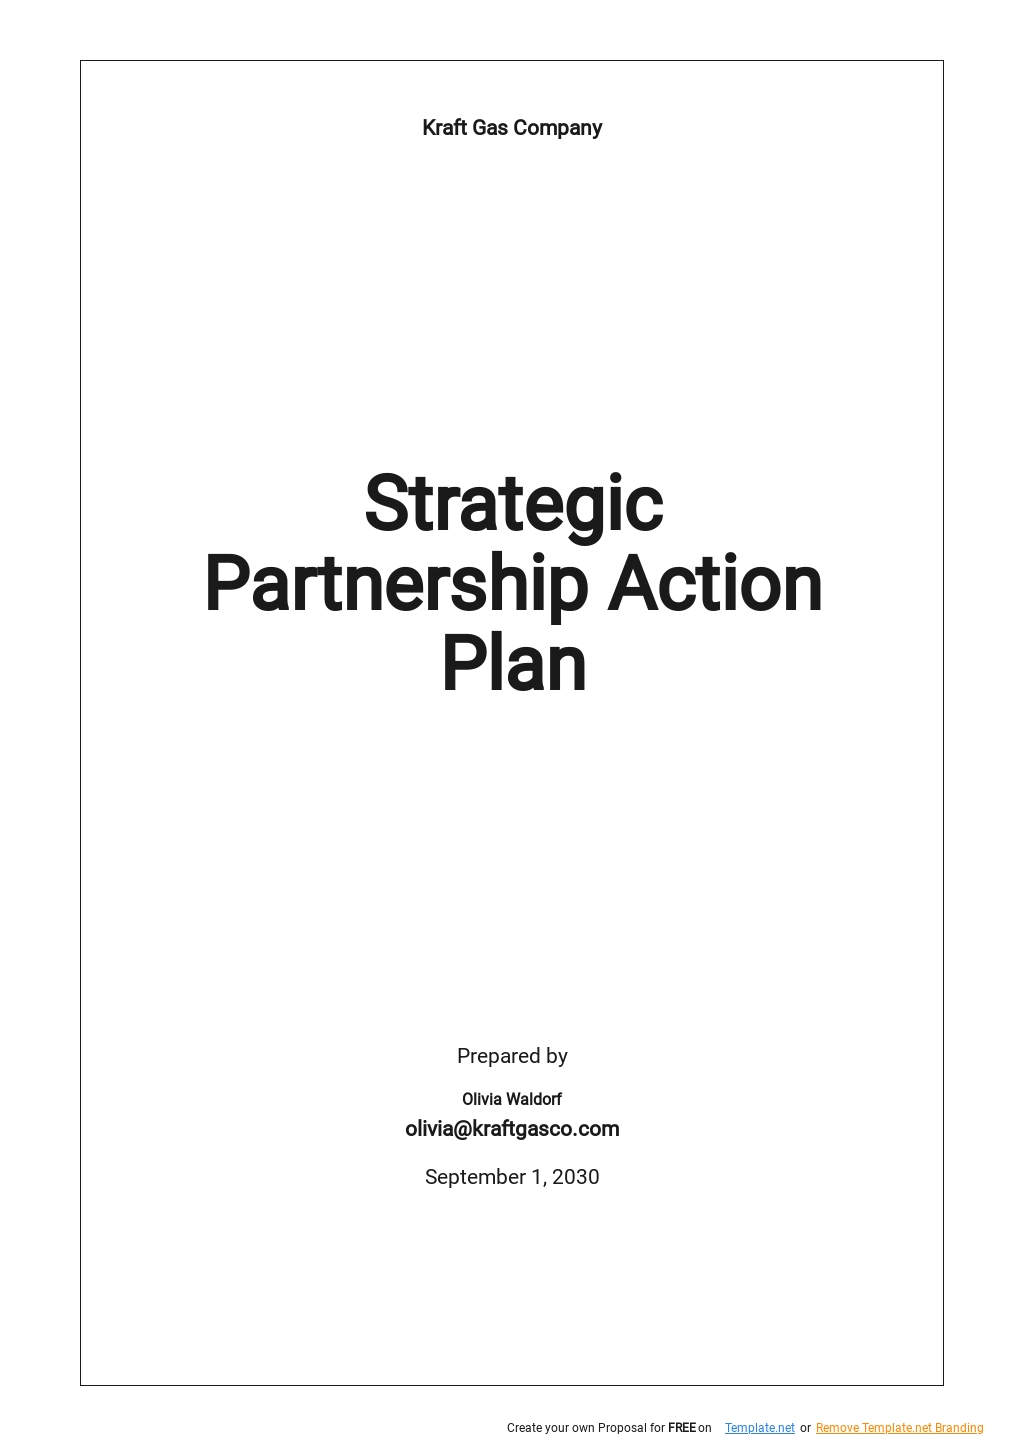 Strategic Partnership Action Plan Template